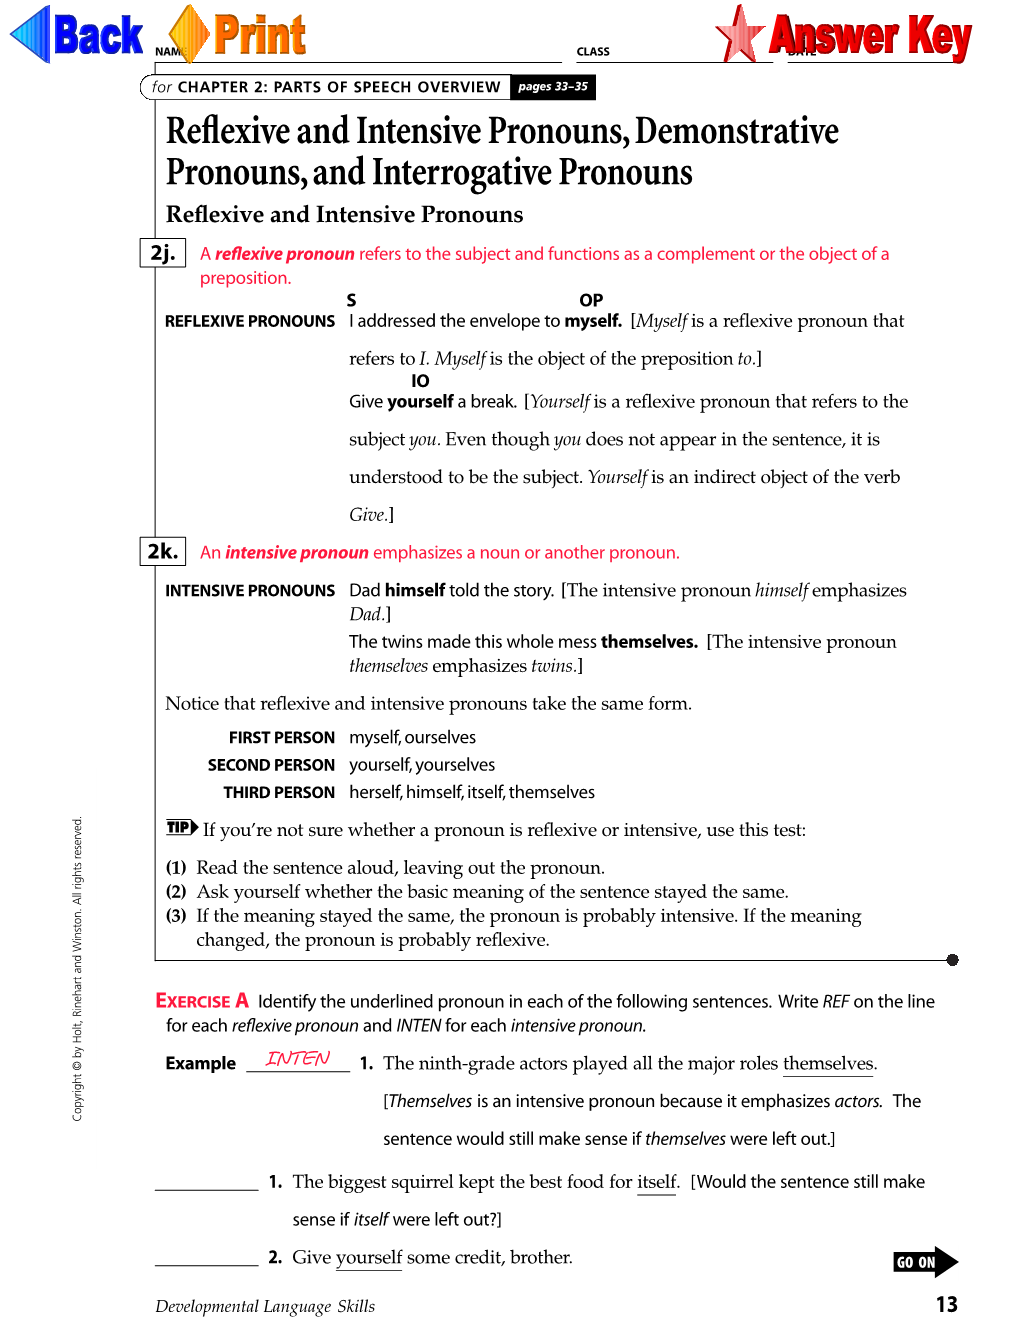 Reflexive and Intensive Pronouns, Demonstrative Pronouns,And